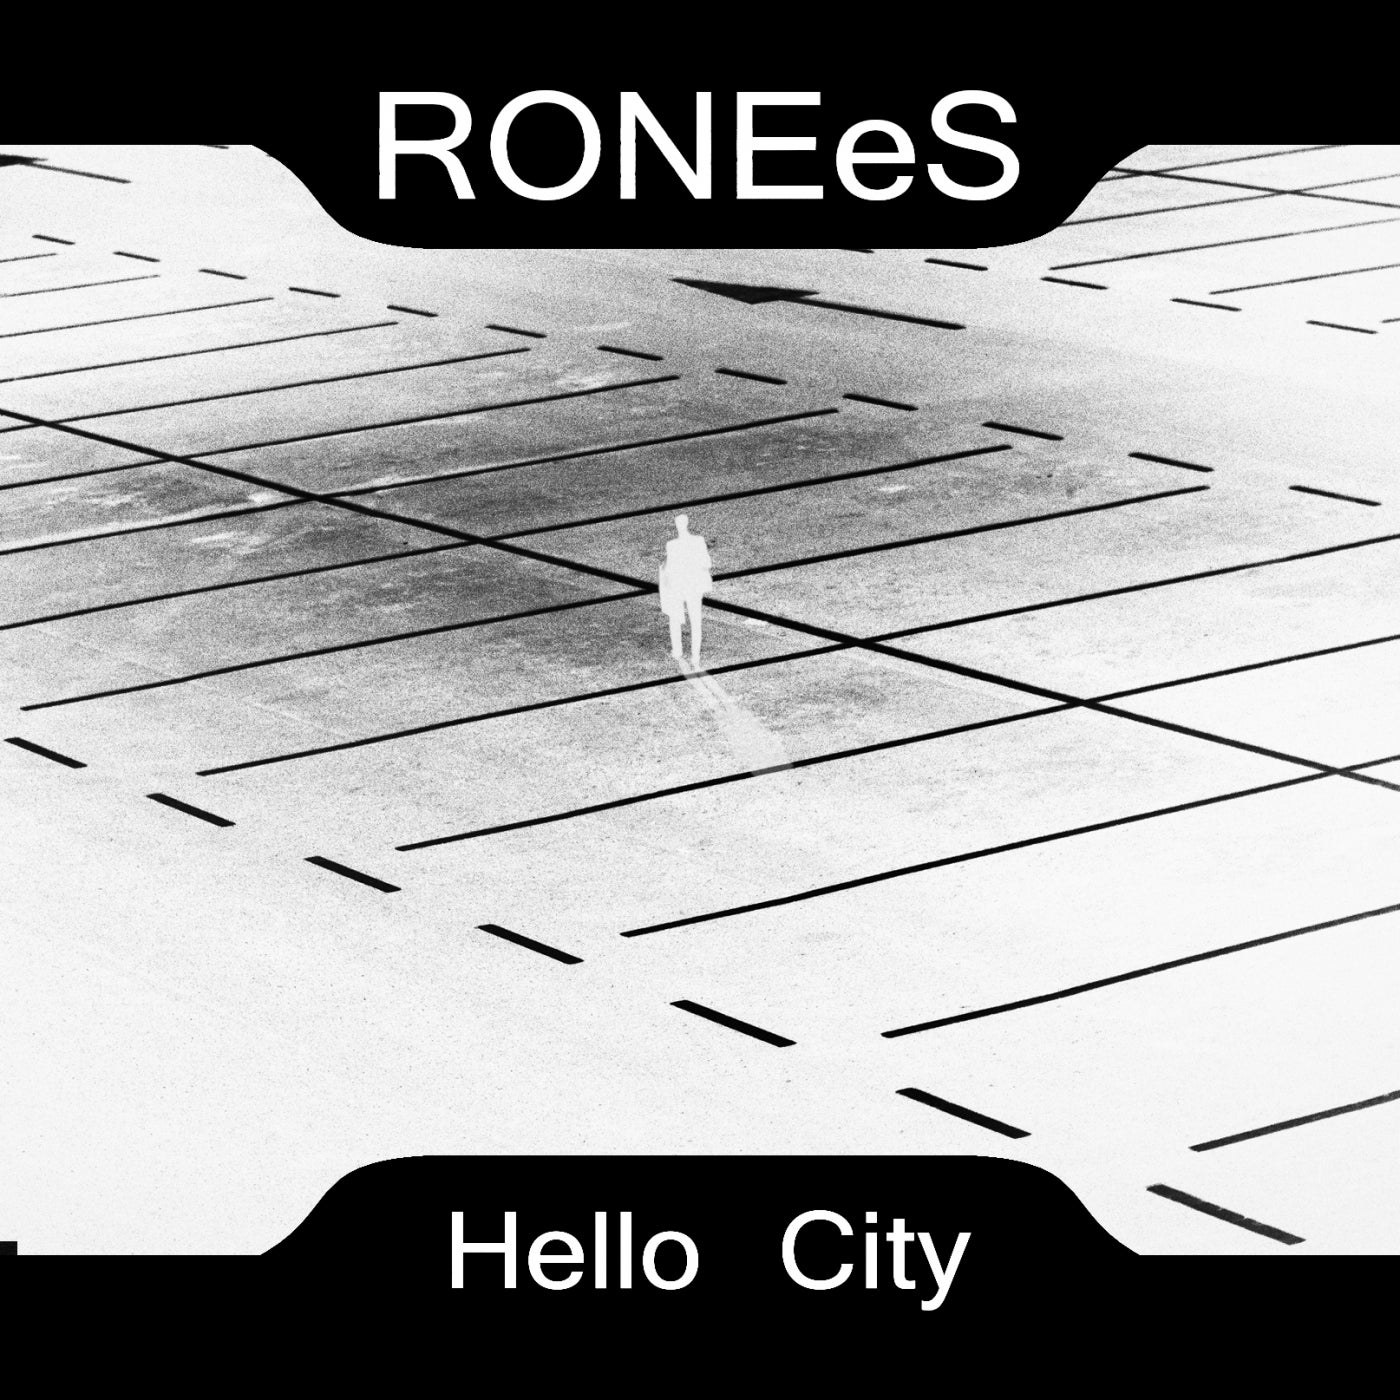 Goodbye City. Кассета Ronees CD-60 F. Трек hello мир манера крутит мир чёрно-белая картинка. Hello city